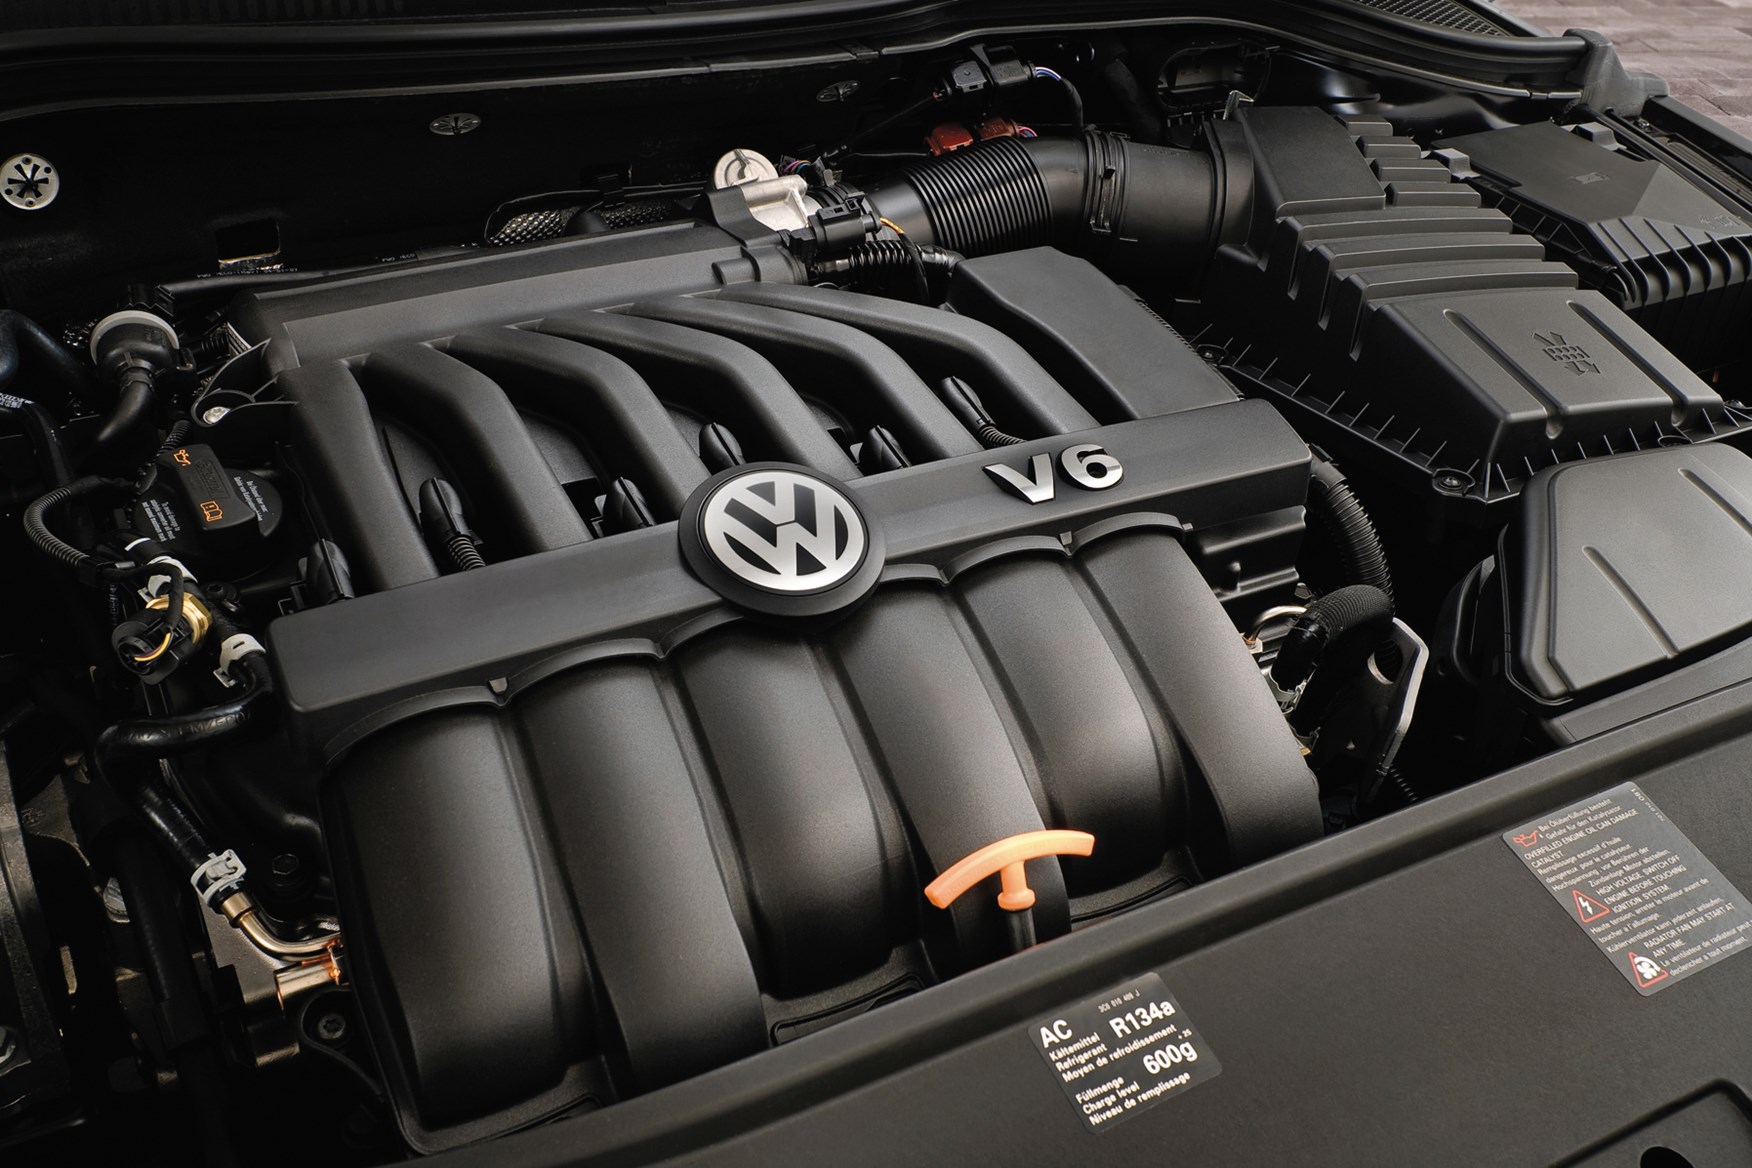 Volkswagen двигатели отзывы. Фольксваген Пассат СС v6. Фольксваген Пассат СС двигатель 3.6. Passat cc 3.6 vr6. Volkswagen Passat мотор v6.